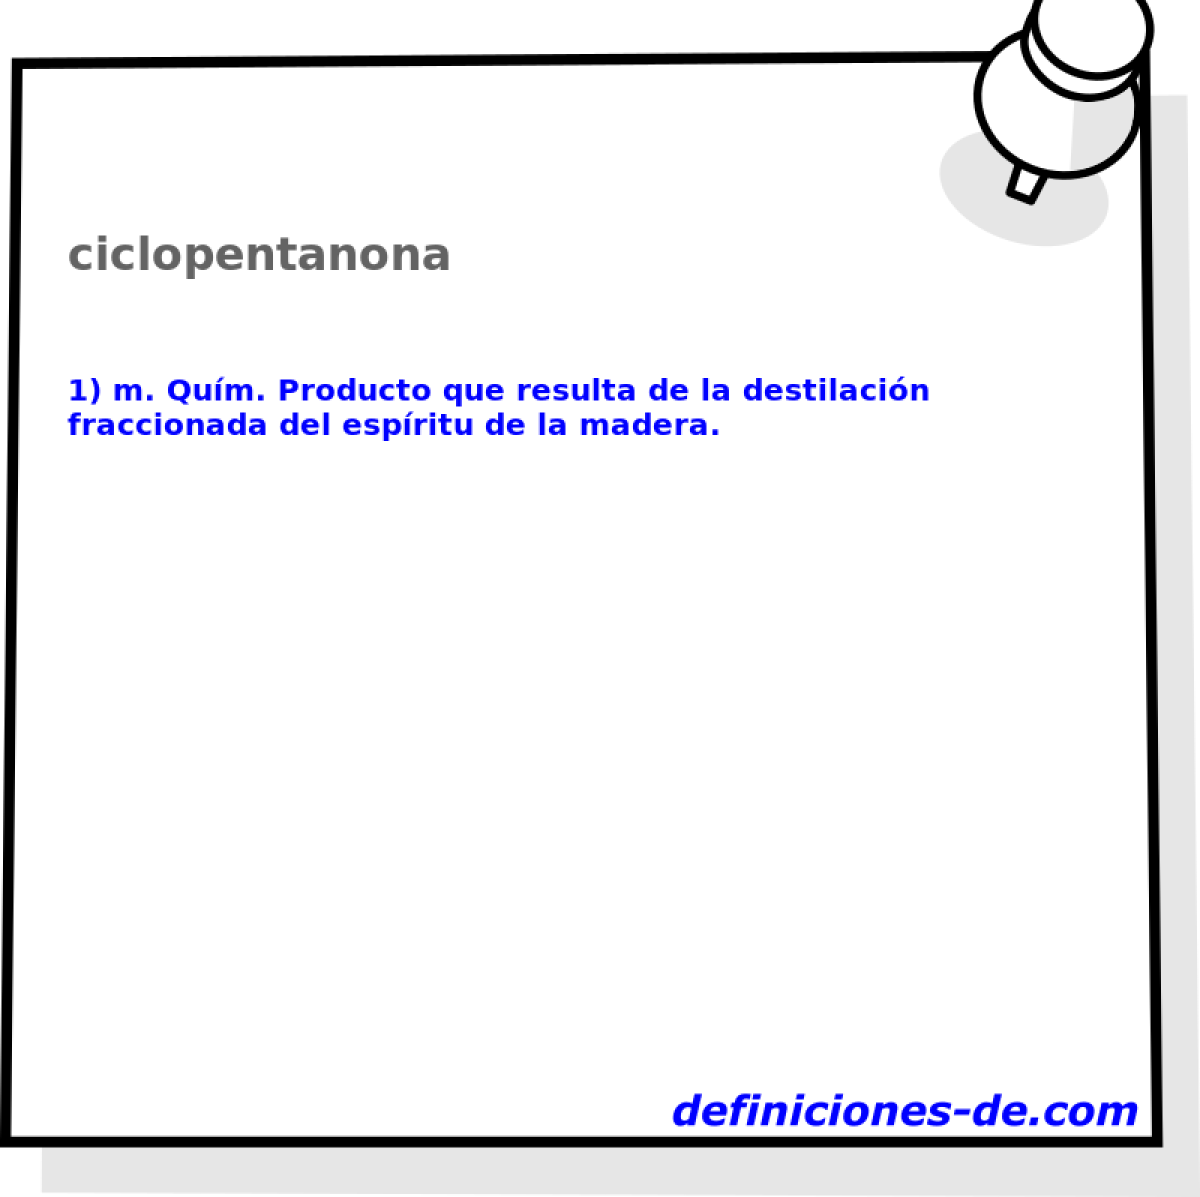 ciclopentanona 